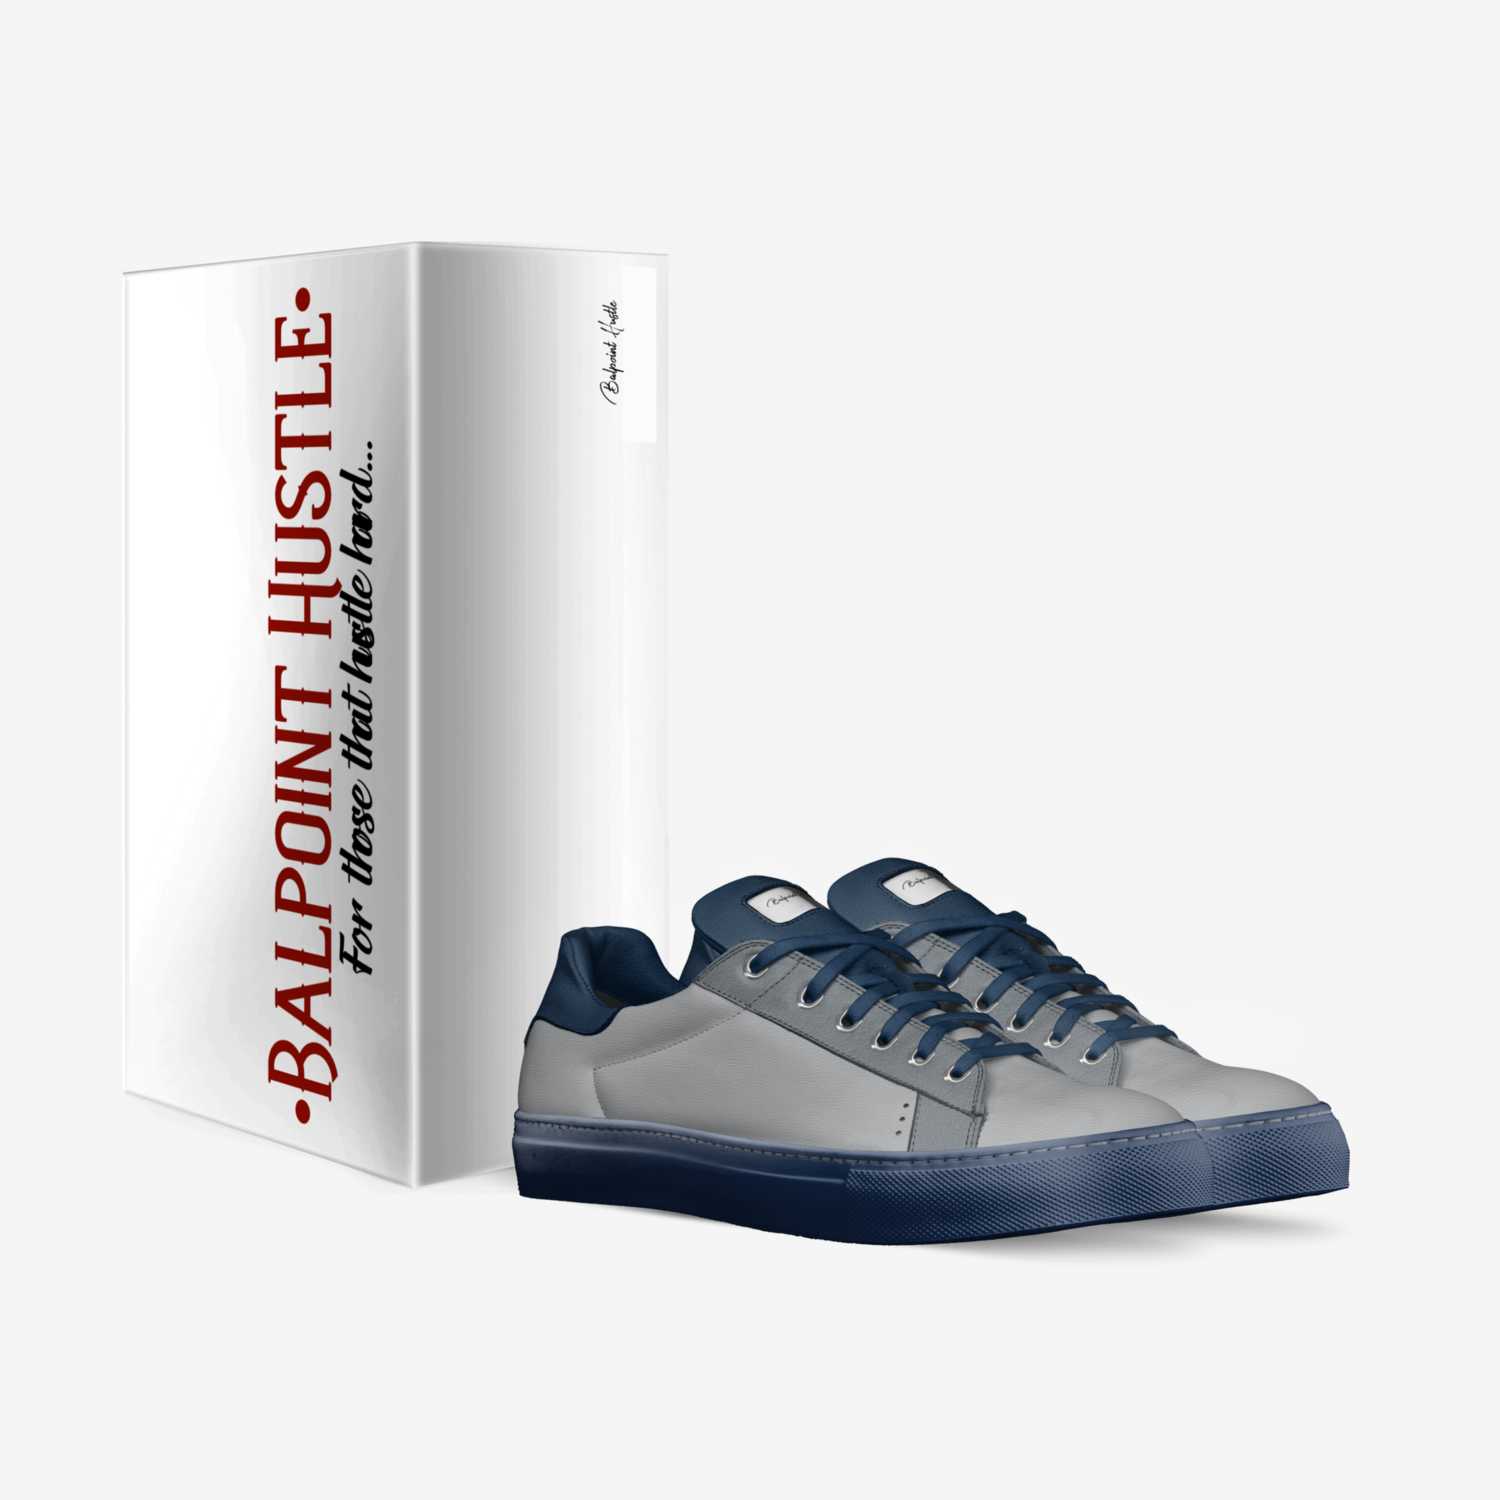 Hustle gang  custom made in Italy shoes by Jacob Nakagawa | Box view